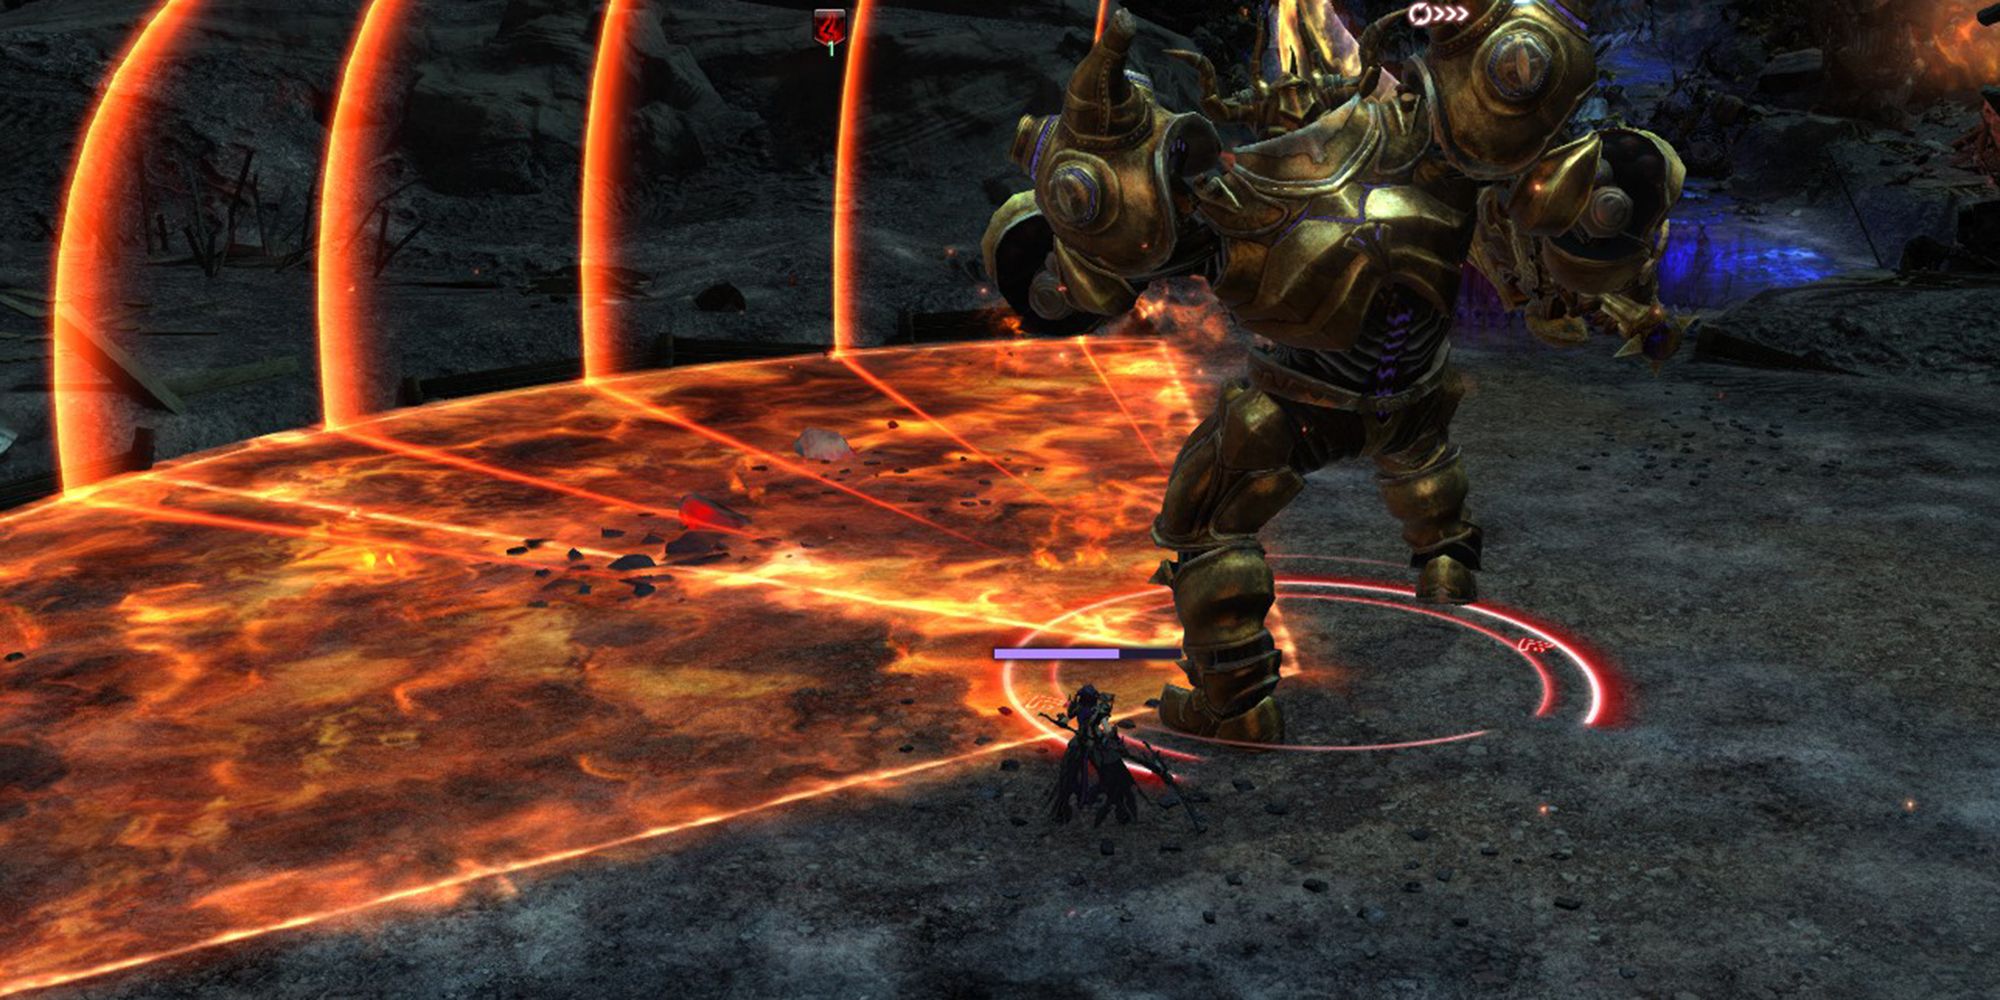 magitek colossus using magitek slash to burn the arena ground